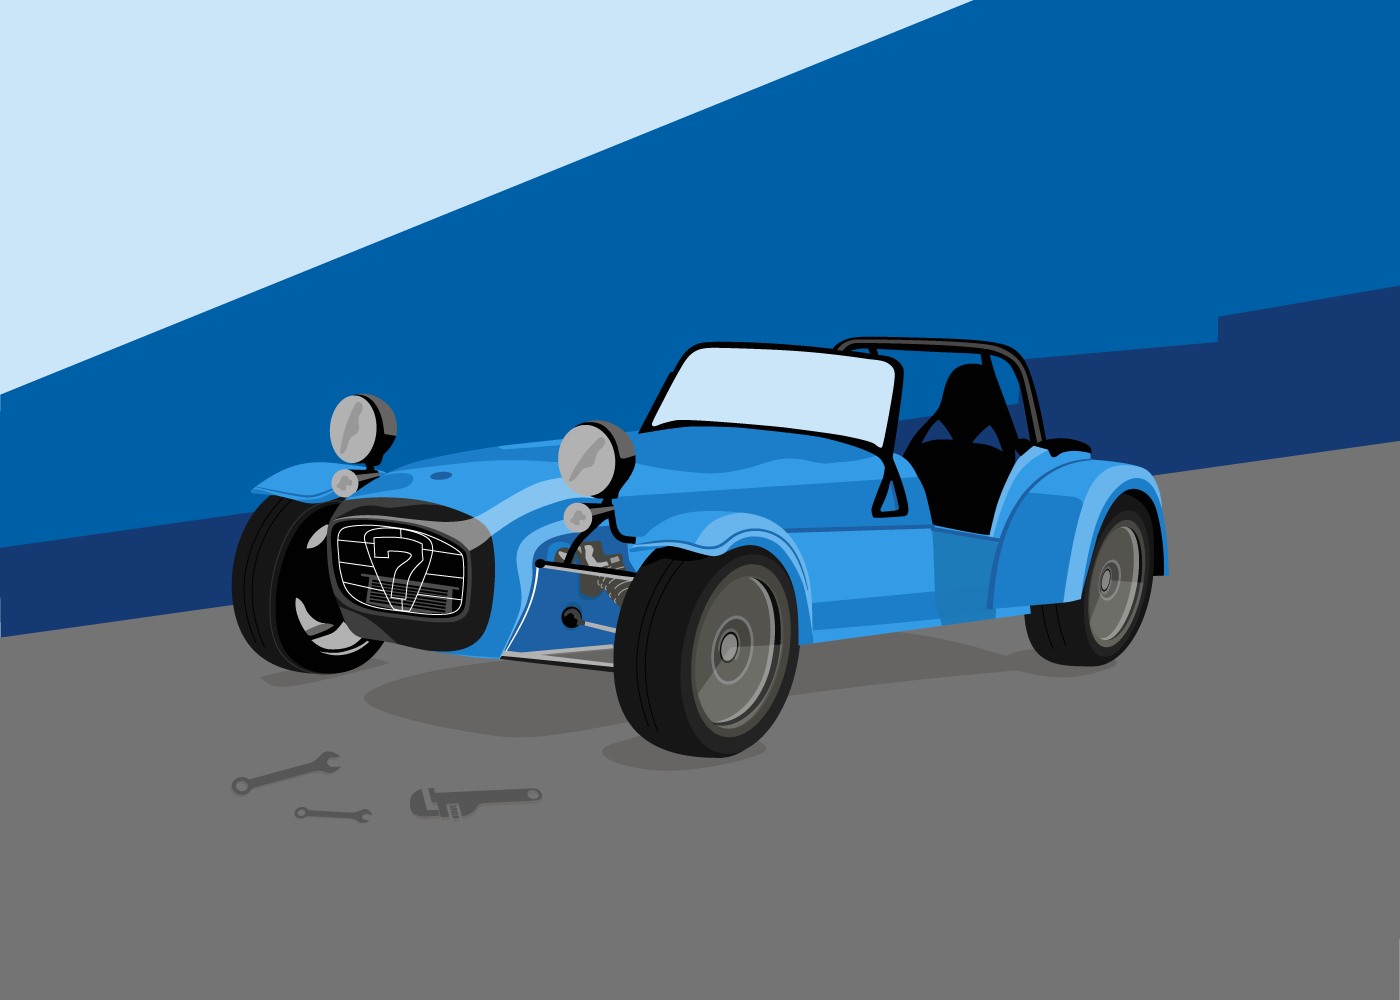 Illustration of a kit car